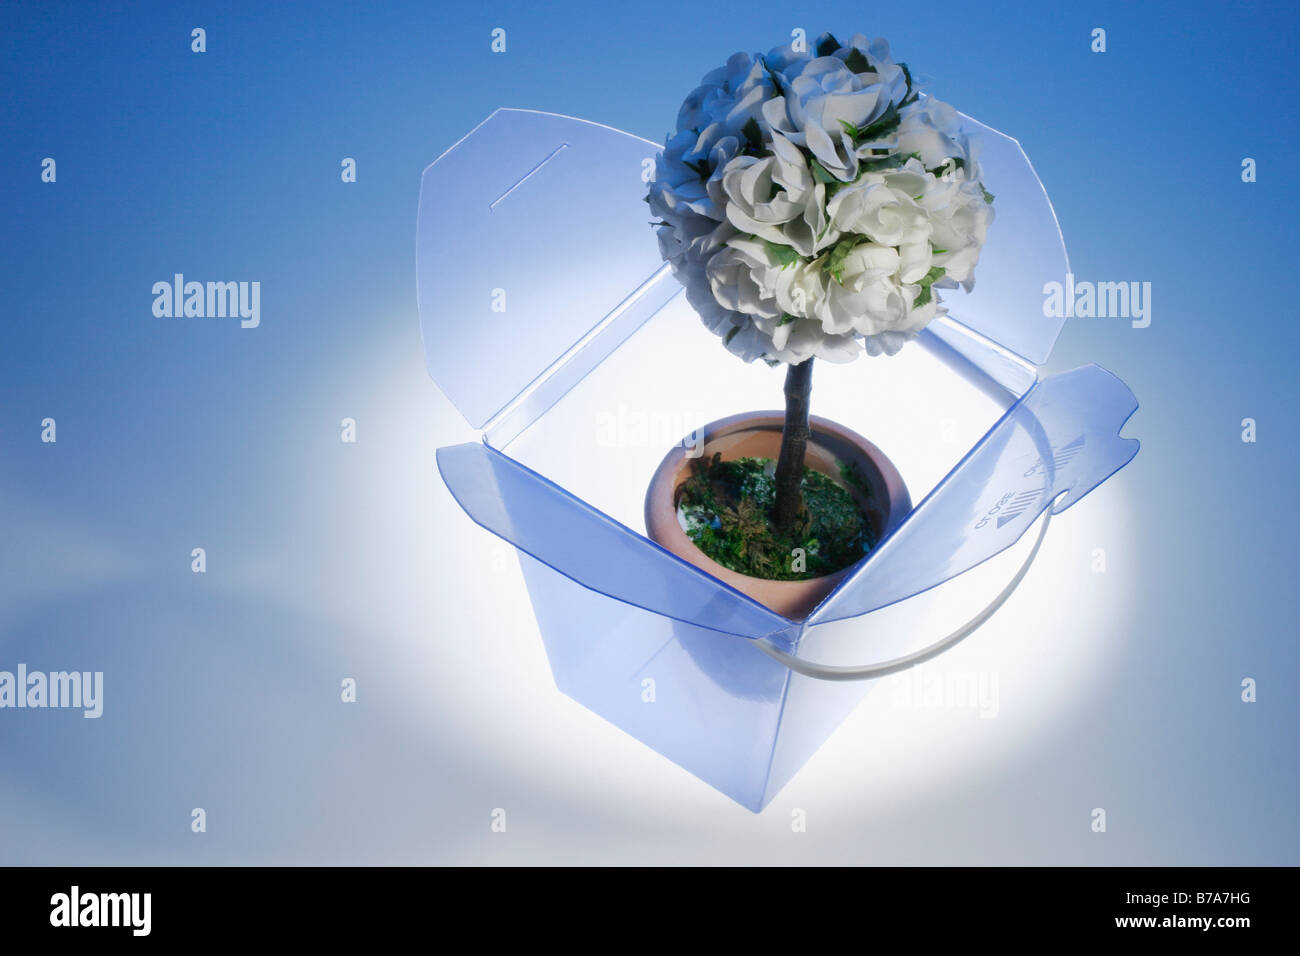 Artificial miniature potplant in gift box Stock Photo